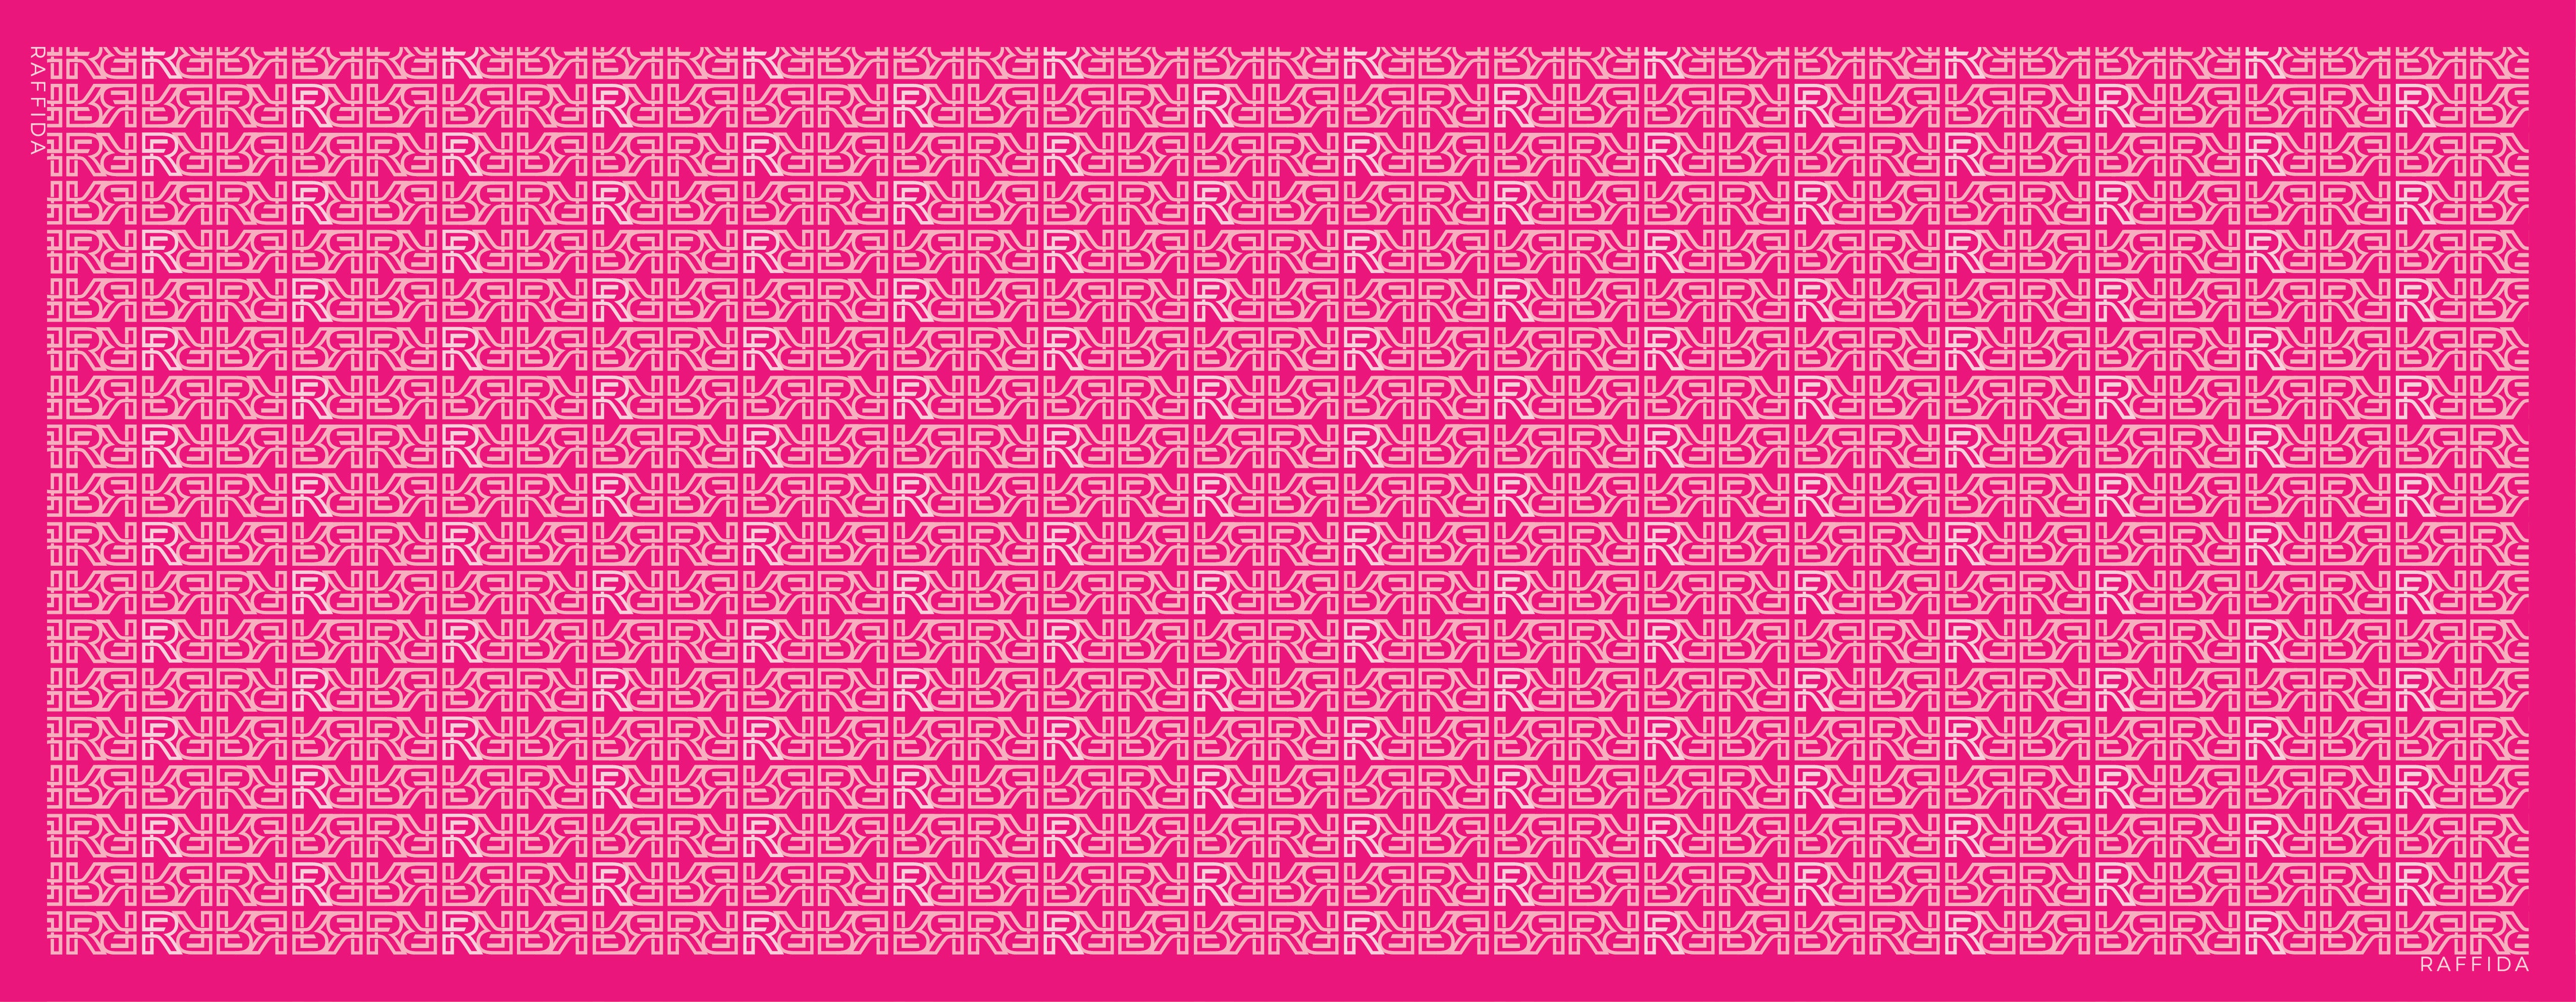 Monogram 2.0 Shawl In Hot Pink – RAFFIDA